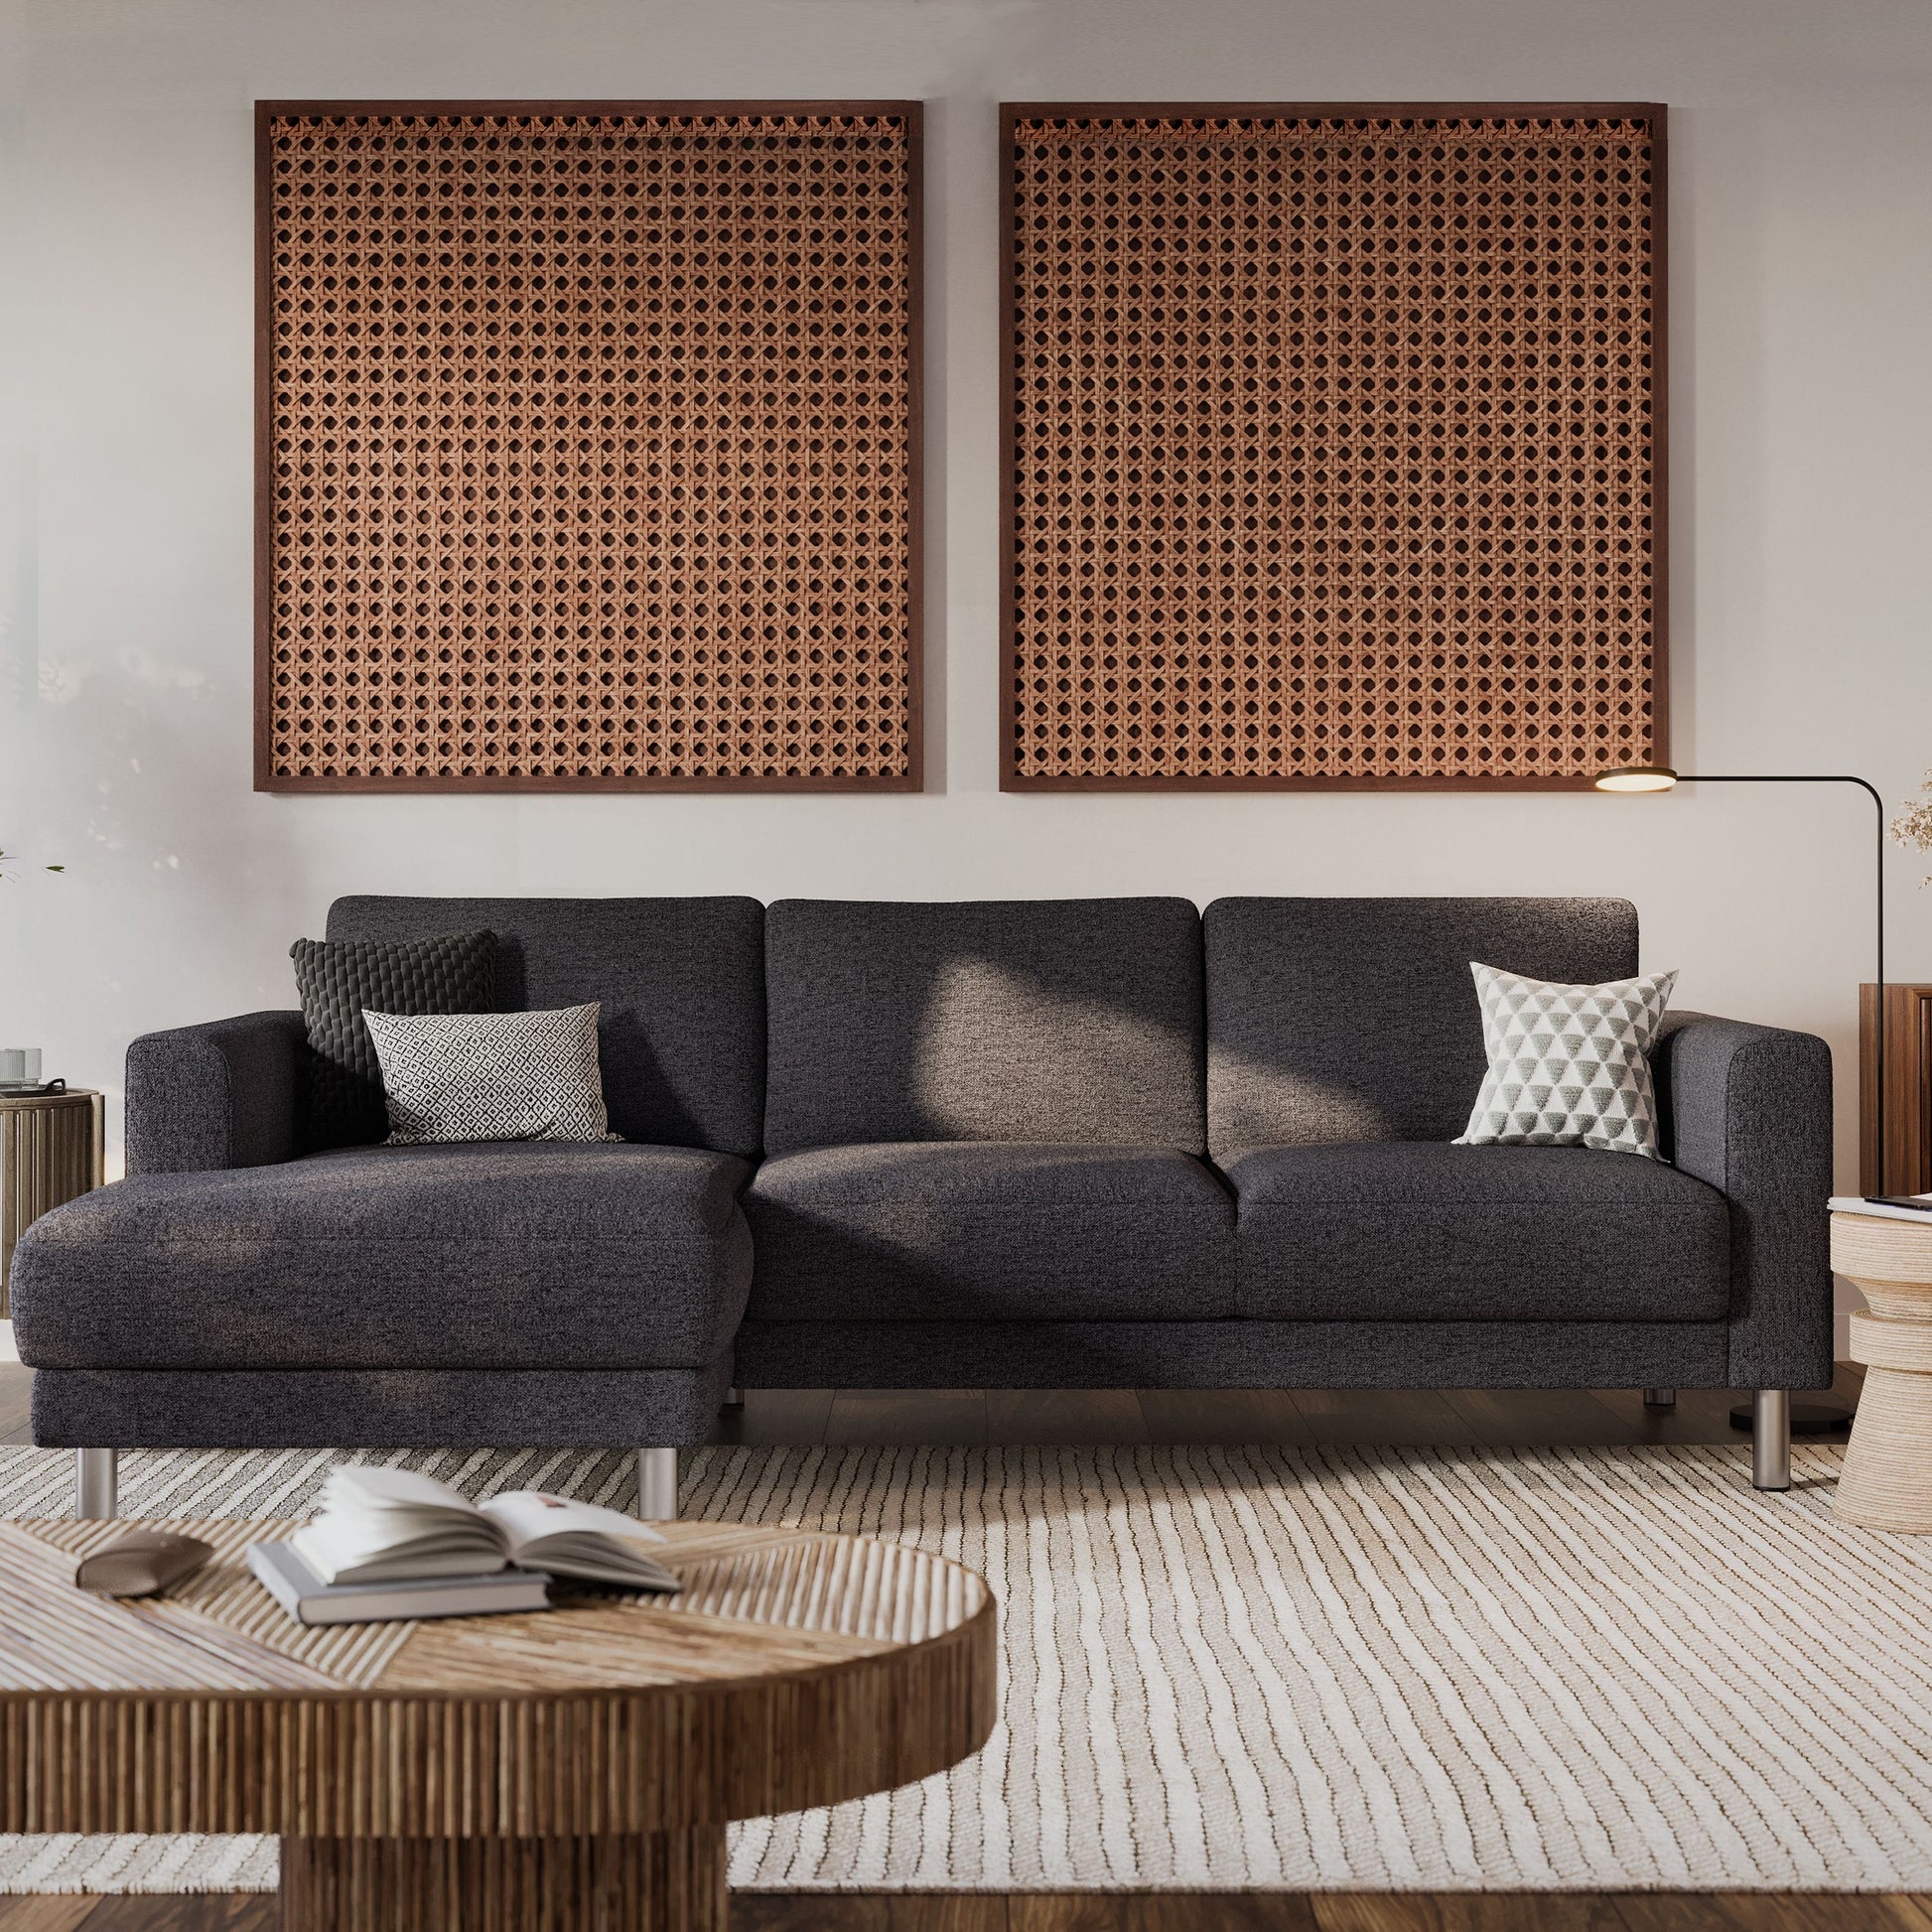 Cleveland Chaiselongue Sofa in Nova - NIXO Furniture.com